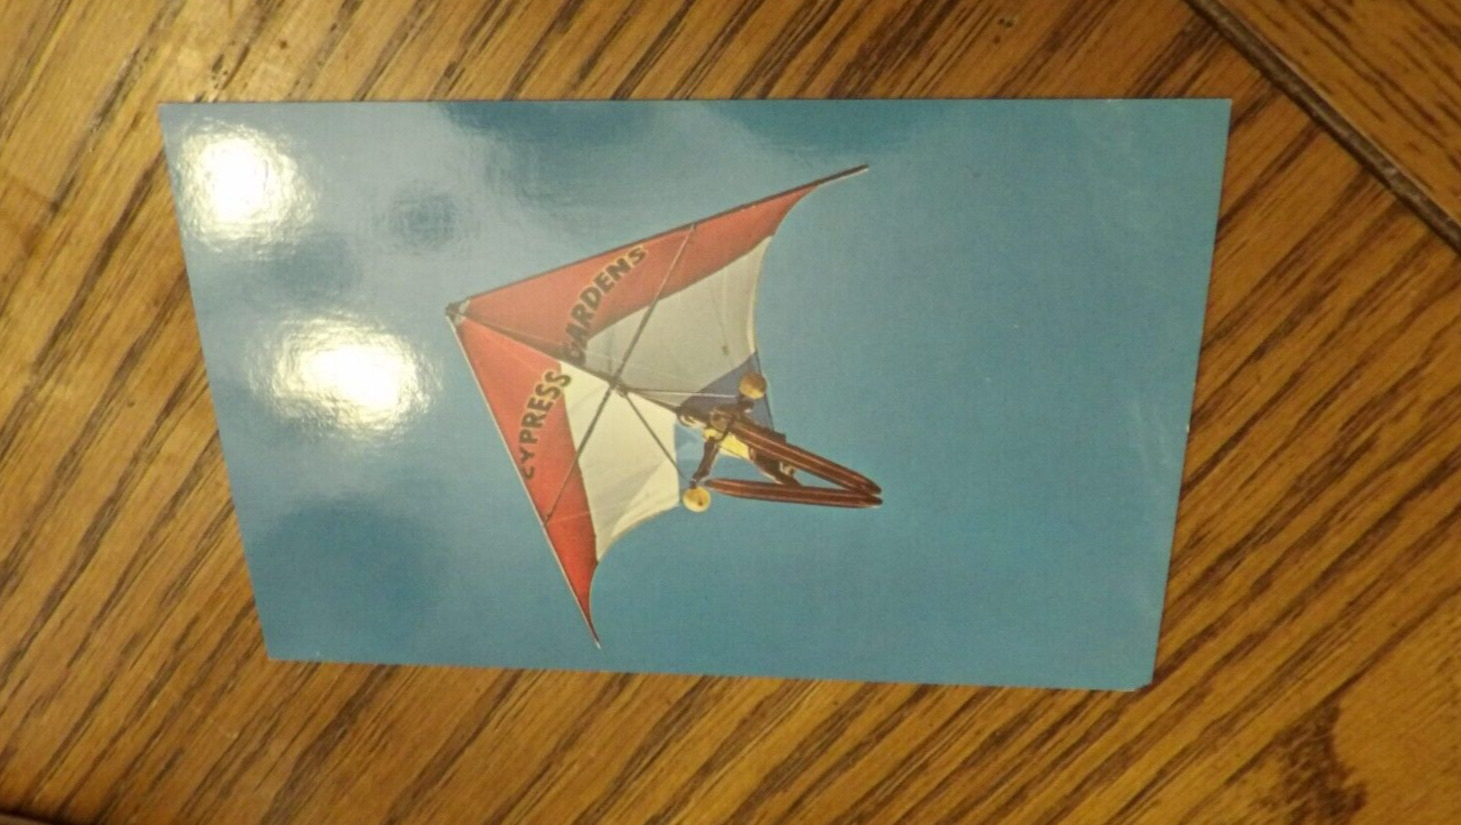 Florida FL Cypress Gardens Delta Kite Flying High Postcard Old Vintage Card View